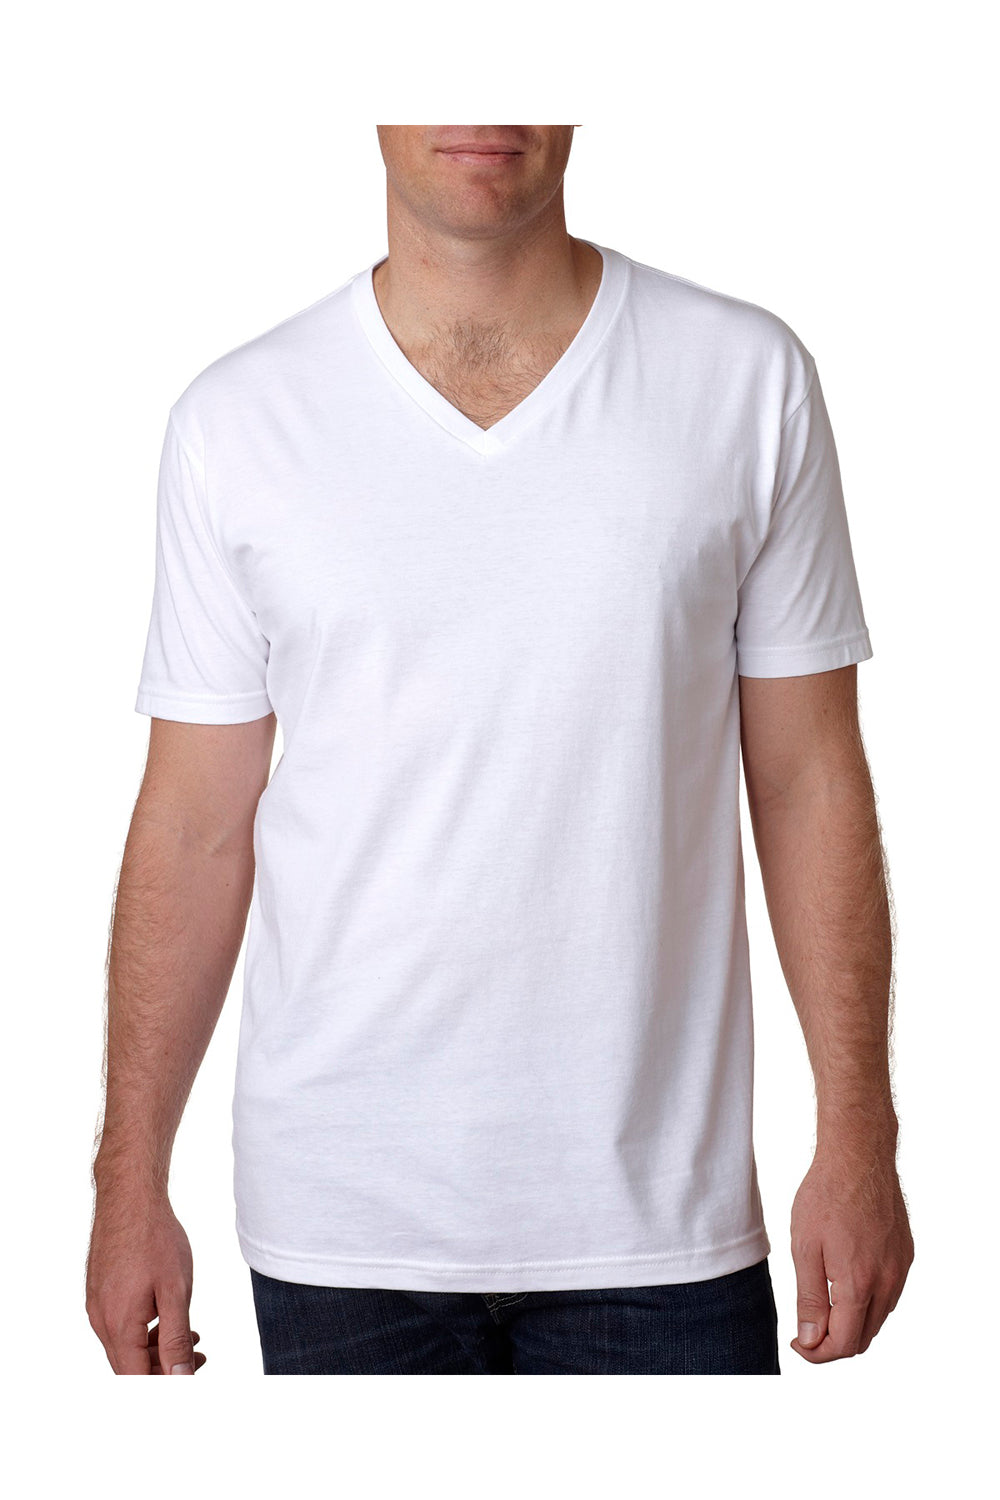 Next Level N3200 Mens Fine Jersey Short Sleeve V-Neck T-Shirt White Front